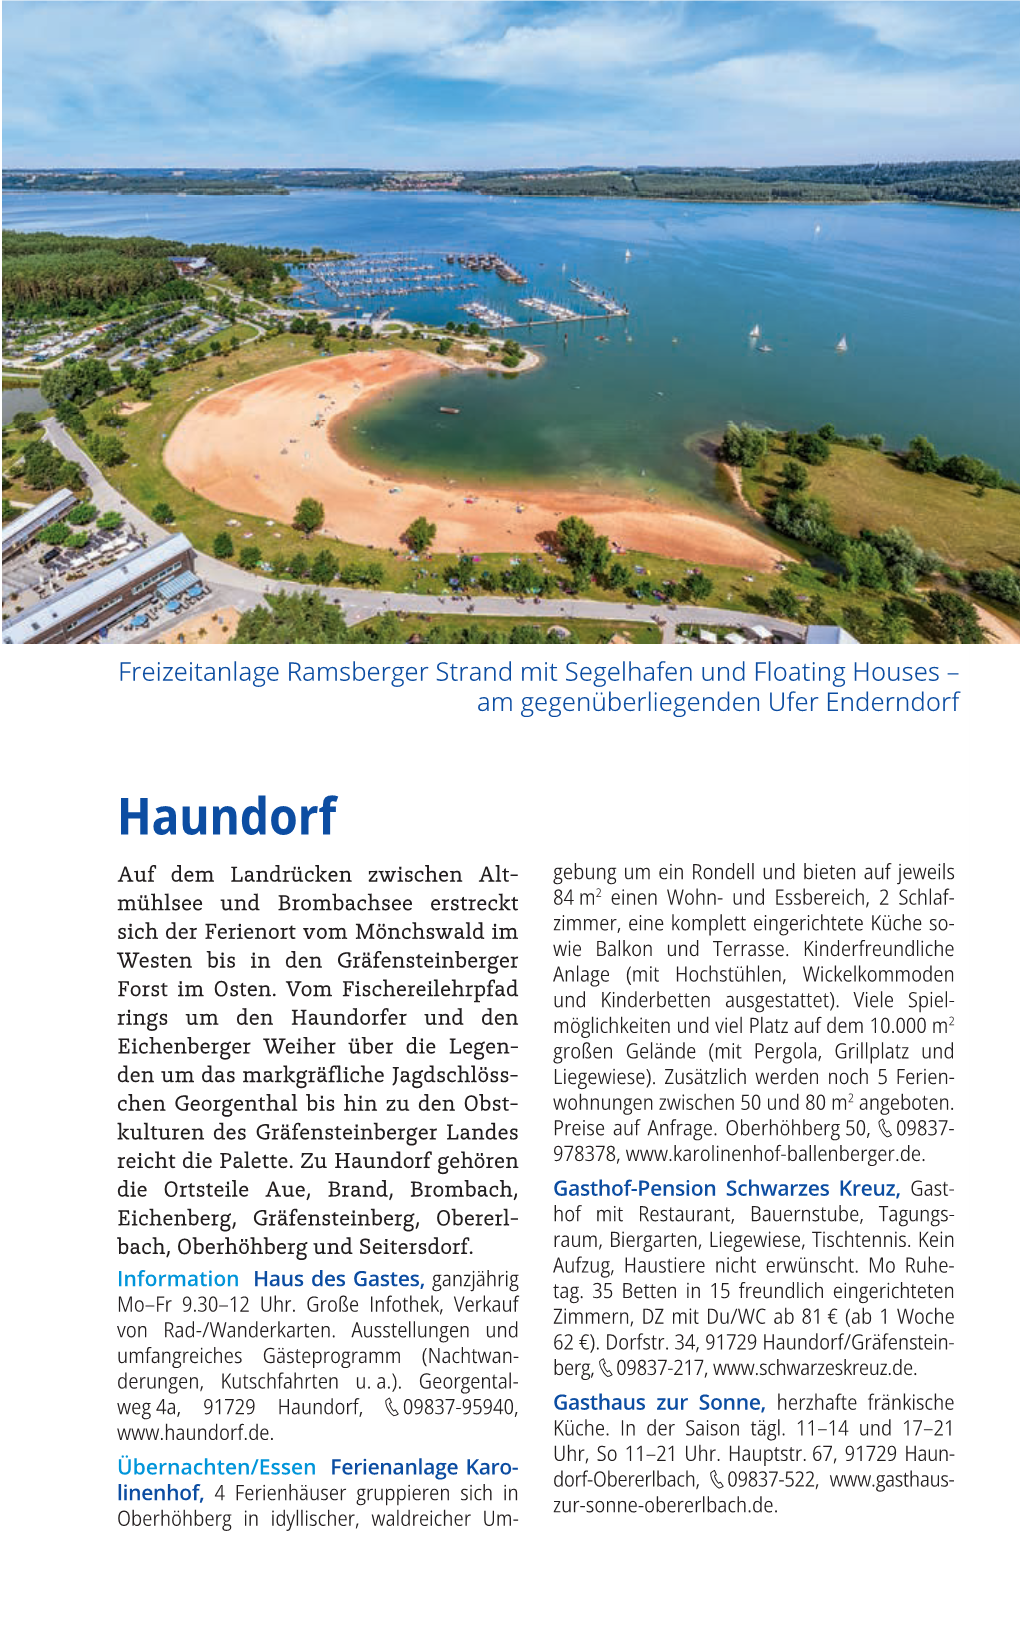 Haundorf 63 09837-522,  21 Uhr